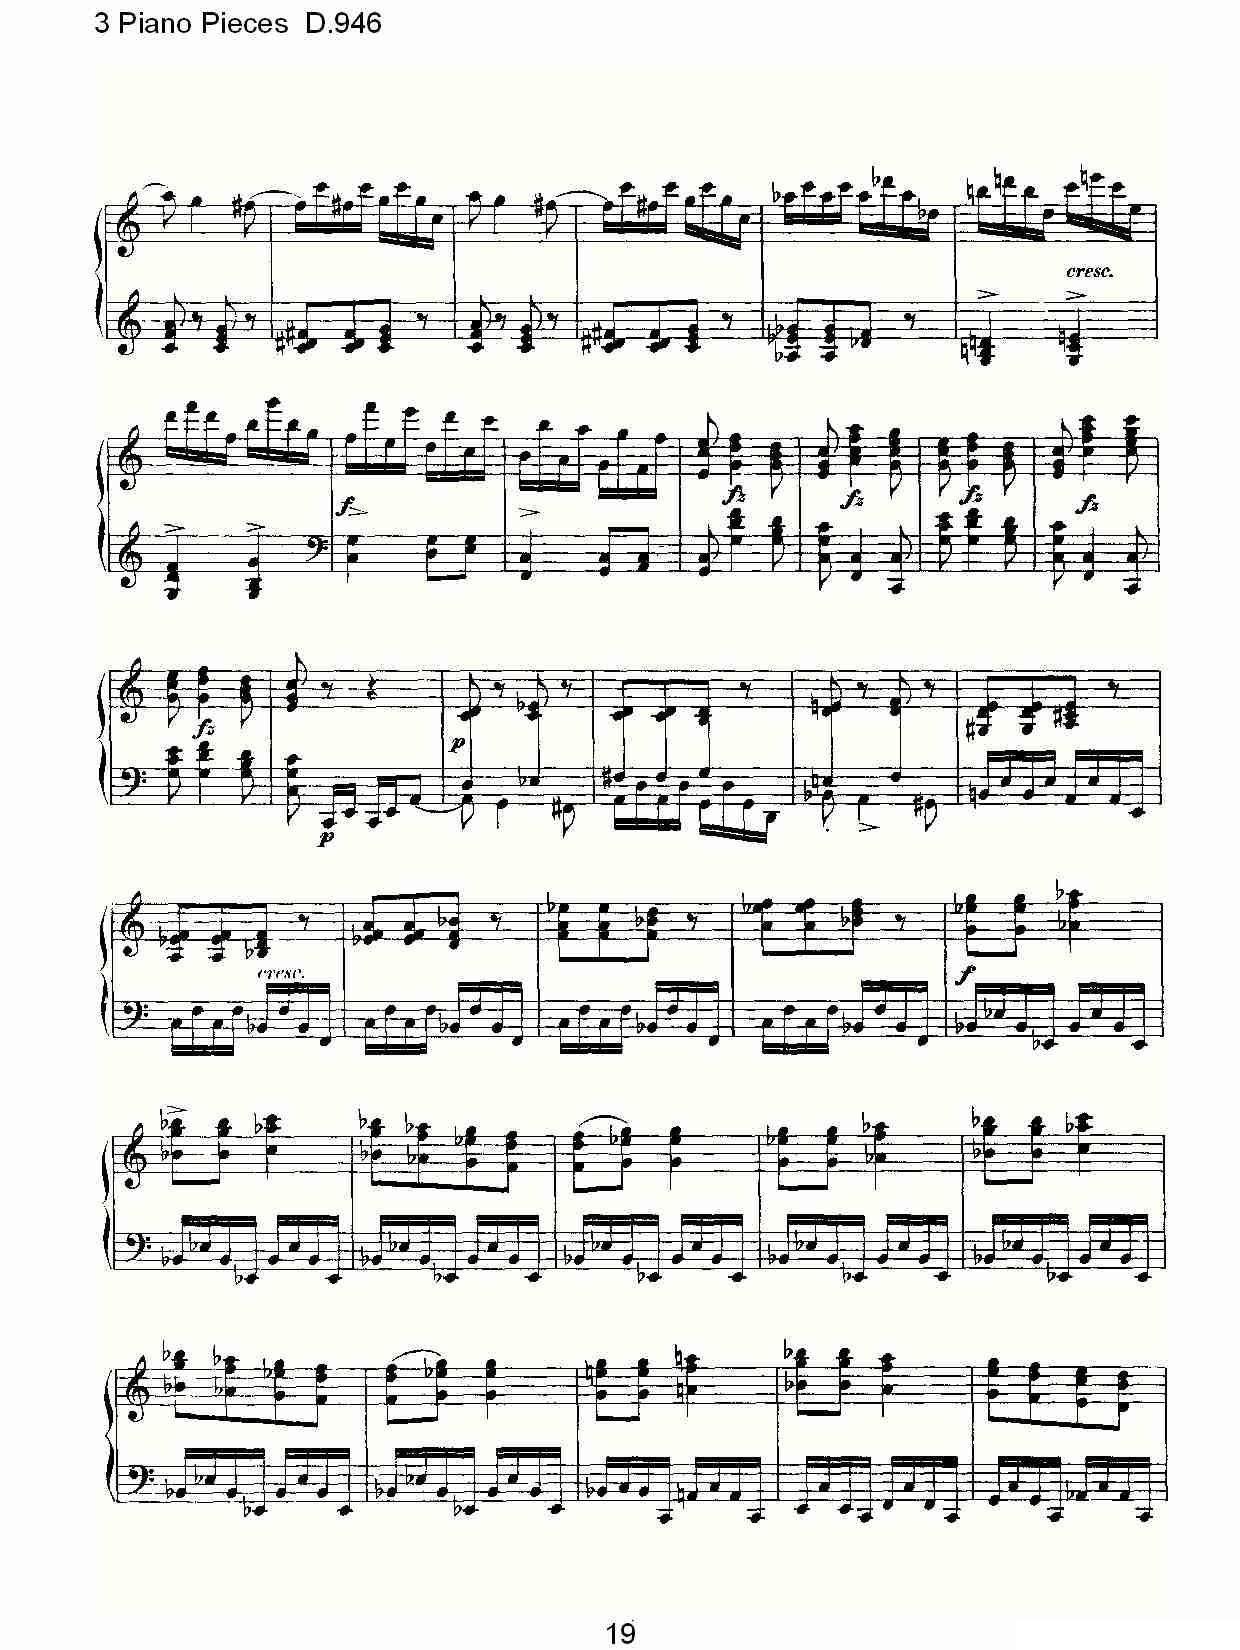 3 Piano Pieces D.946（钢琴三联奏D.946）钢琴曲谱（图19）